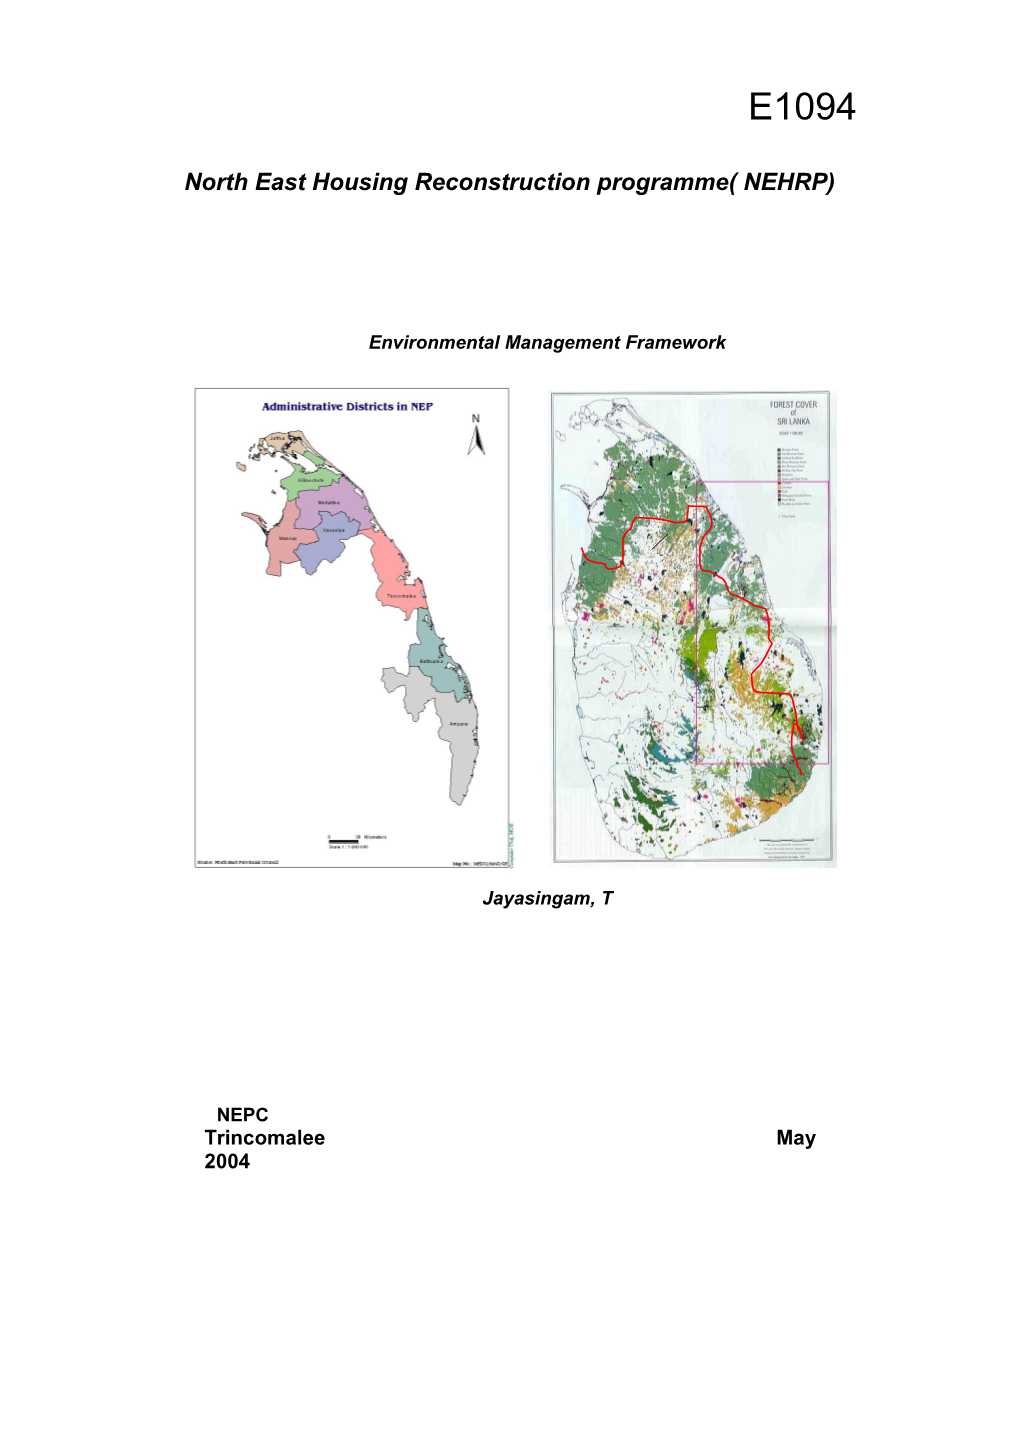 Environmental Management Framework/NEHRP